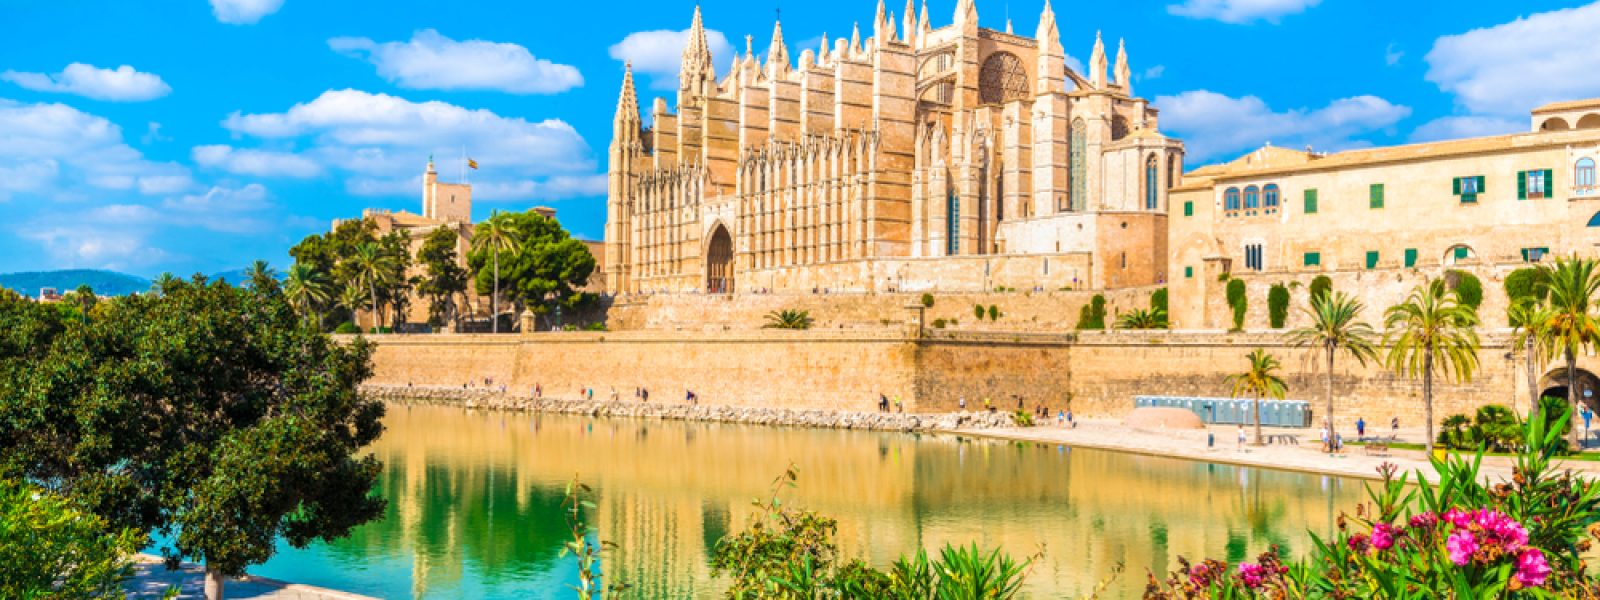 The,Gothic,Cathedral,La,Seu,At,Palma,De,Mallorca,Islands,